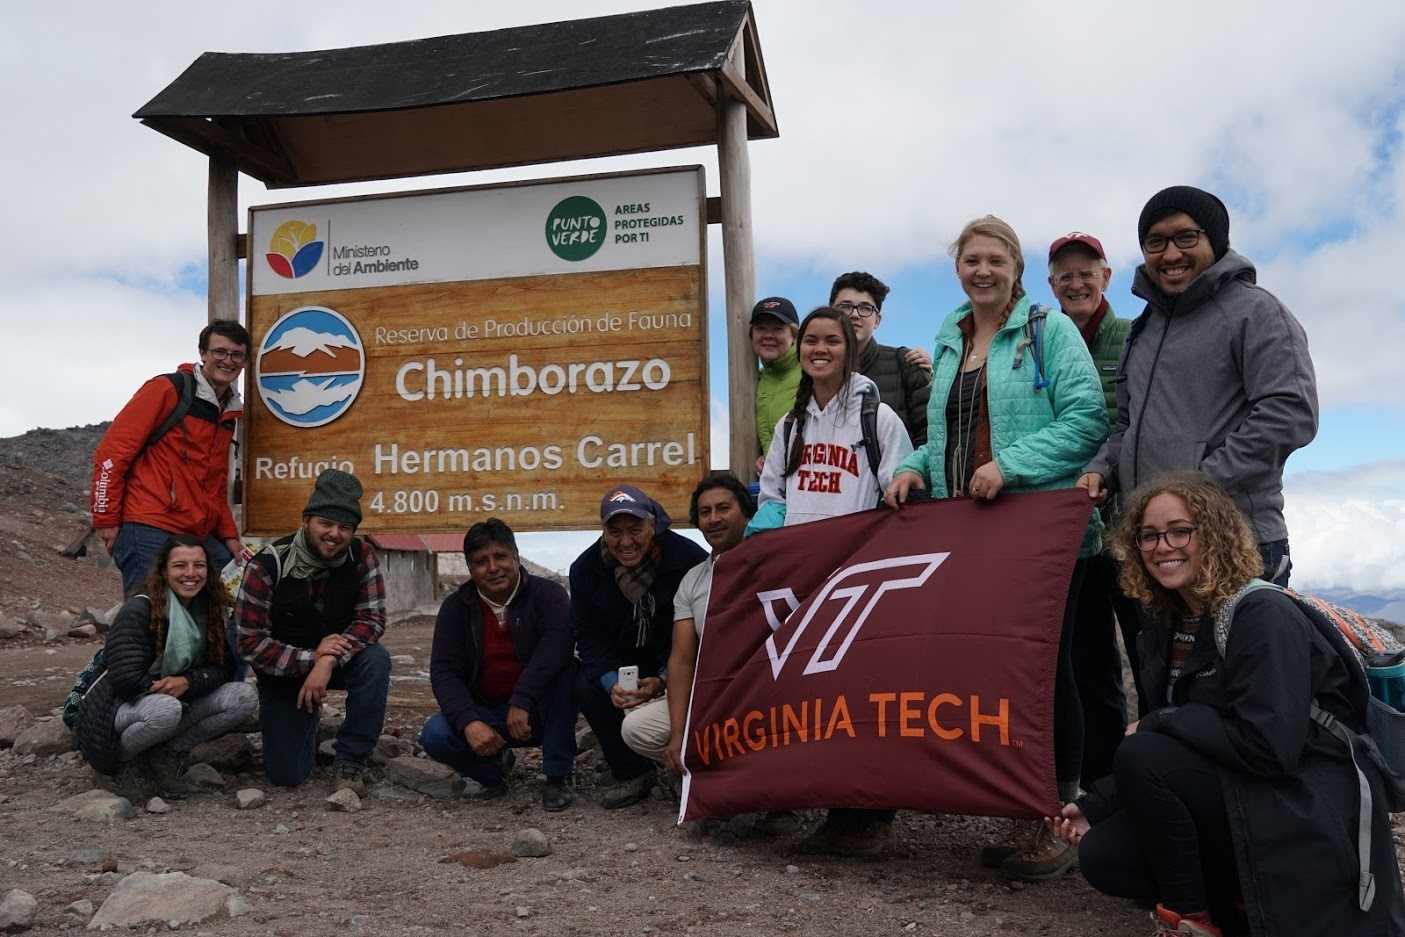 Students display Virginia Tech flag on Chimborazo volcano.